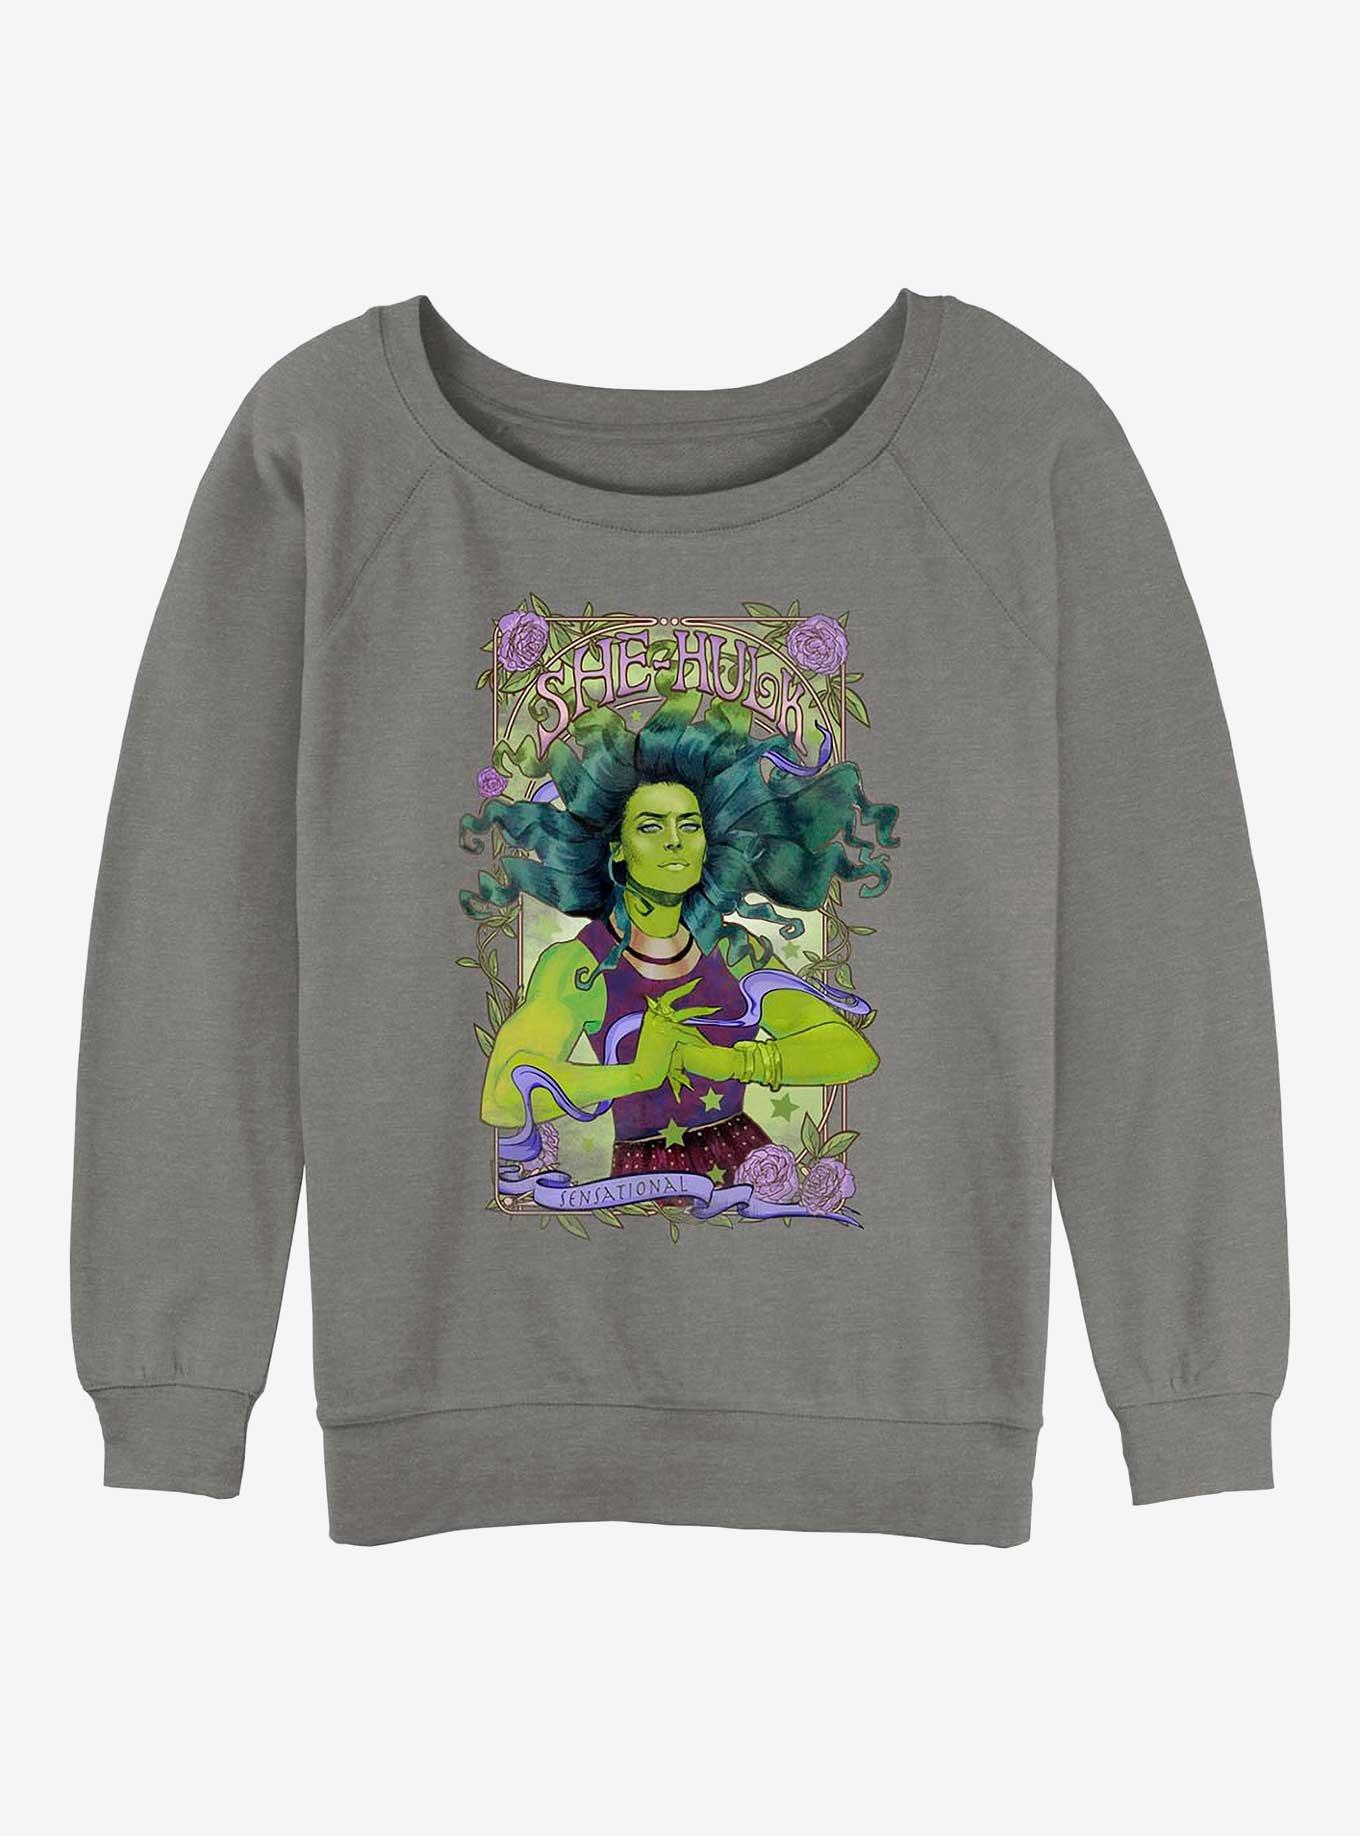 Marvel Hulk She-Hulk Nouveau Girls Slouchy Sweatshirt, GRAY HTR, hi-res